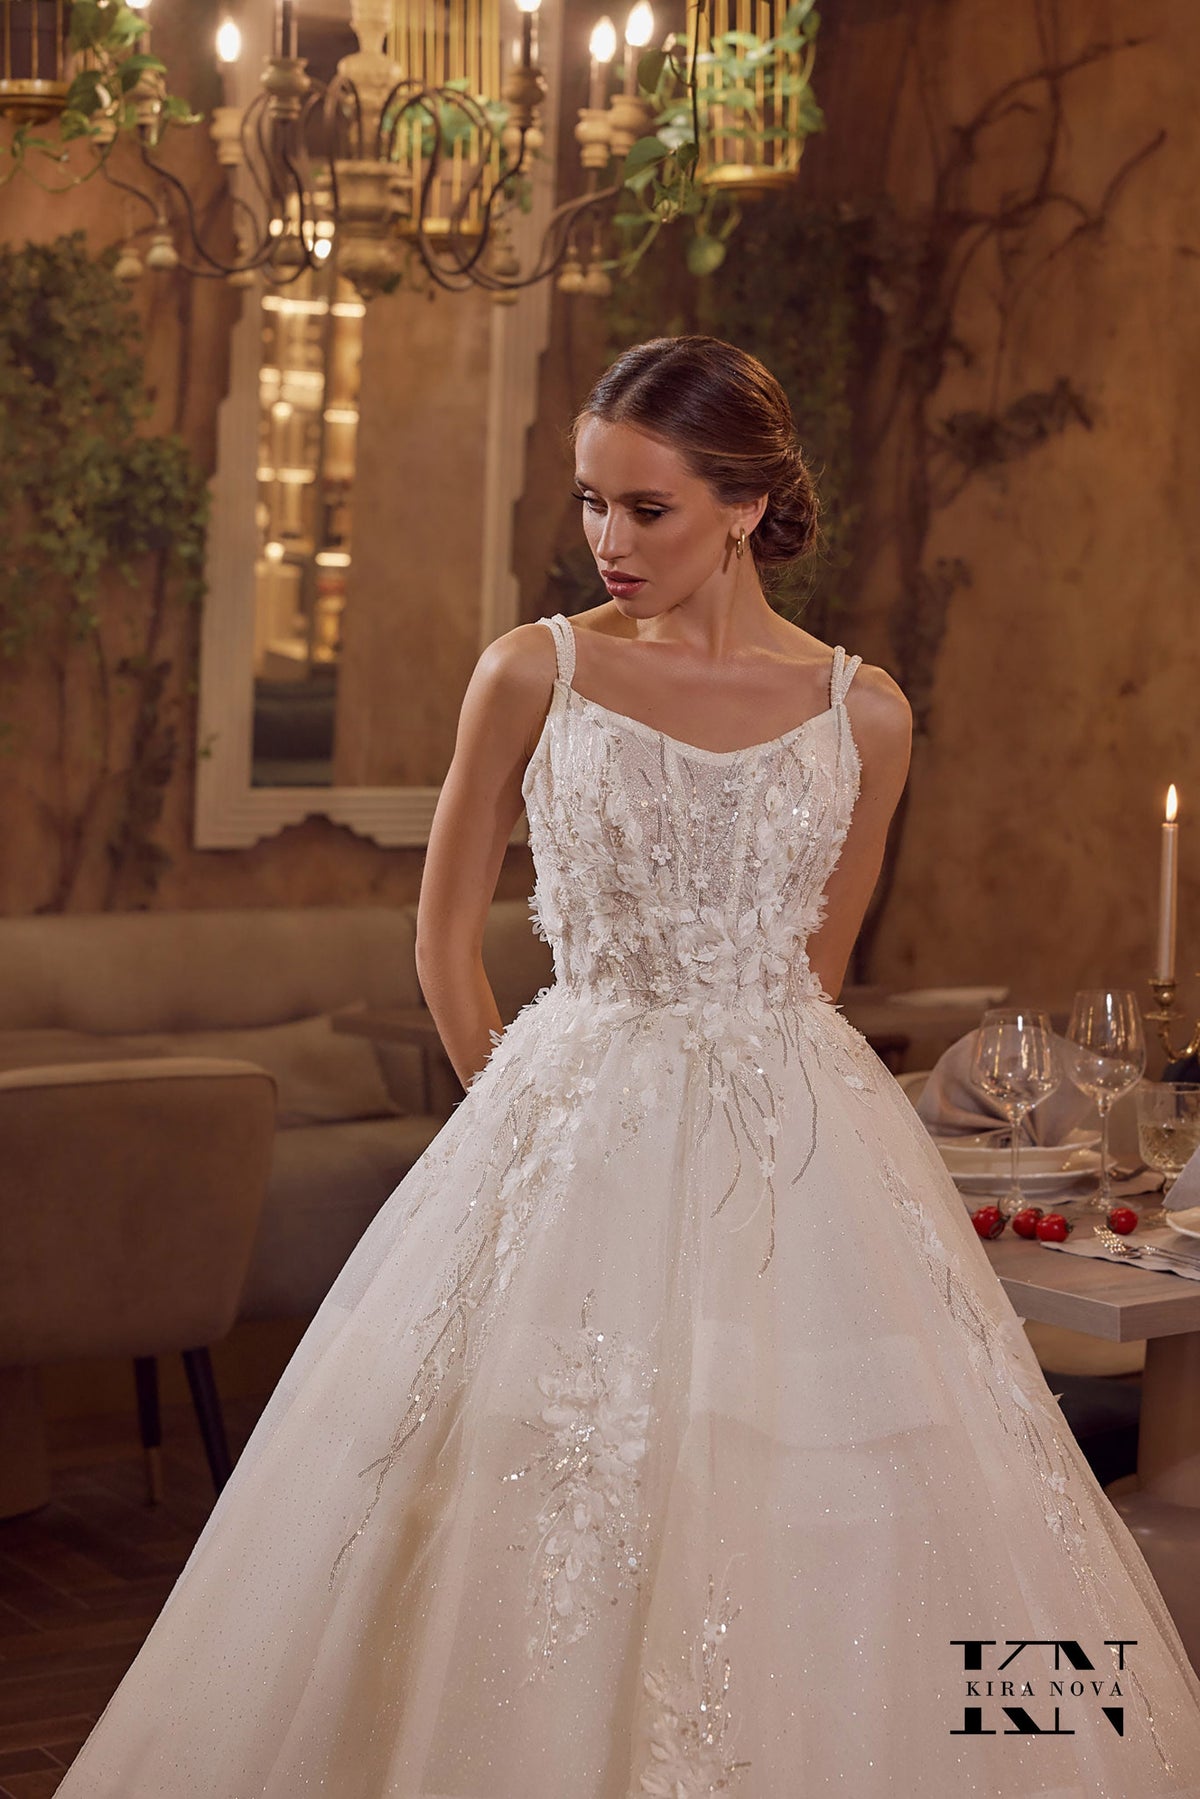 Unique Ball Gown Wedding Dress Sleeveless with Straps Slight V Neckline 3D Floral Design Sparkle Bridal Gown Open Back Lace